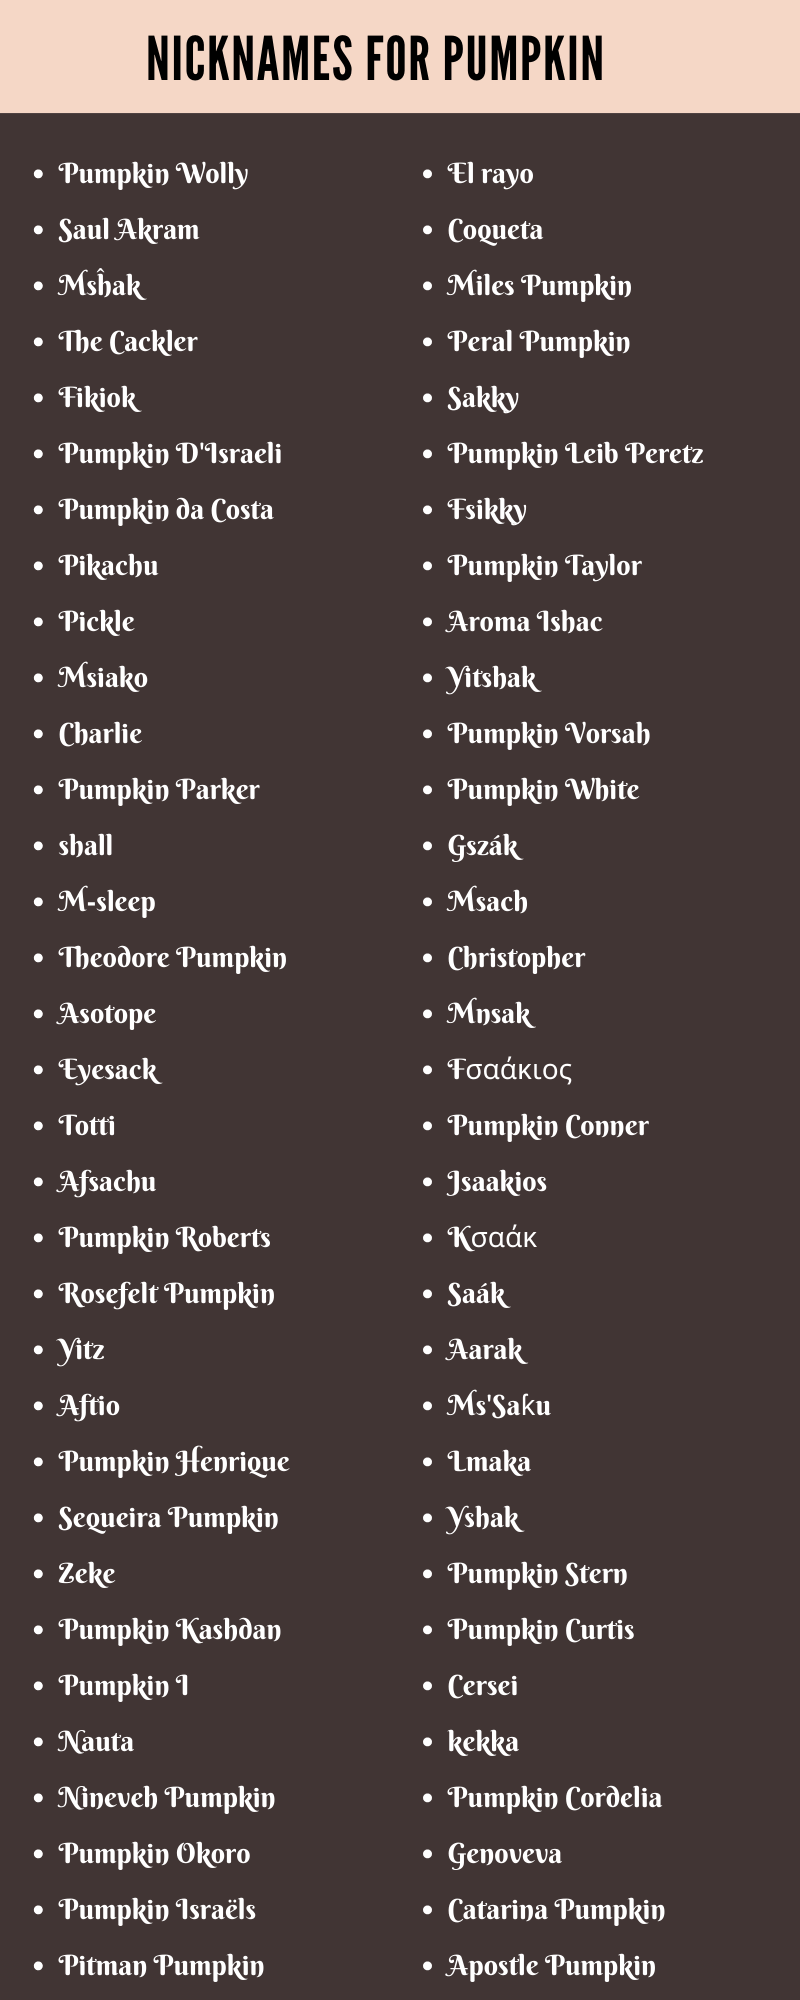 Nicknames For Pumpkin